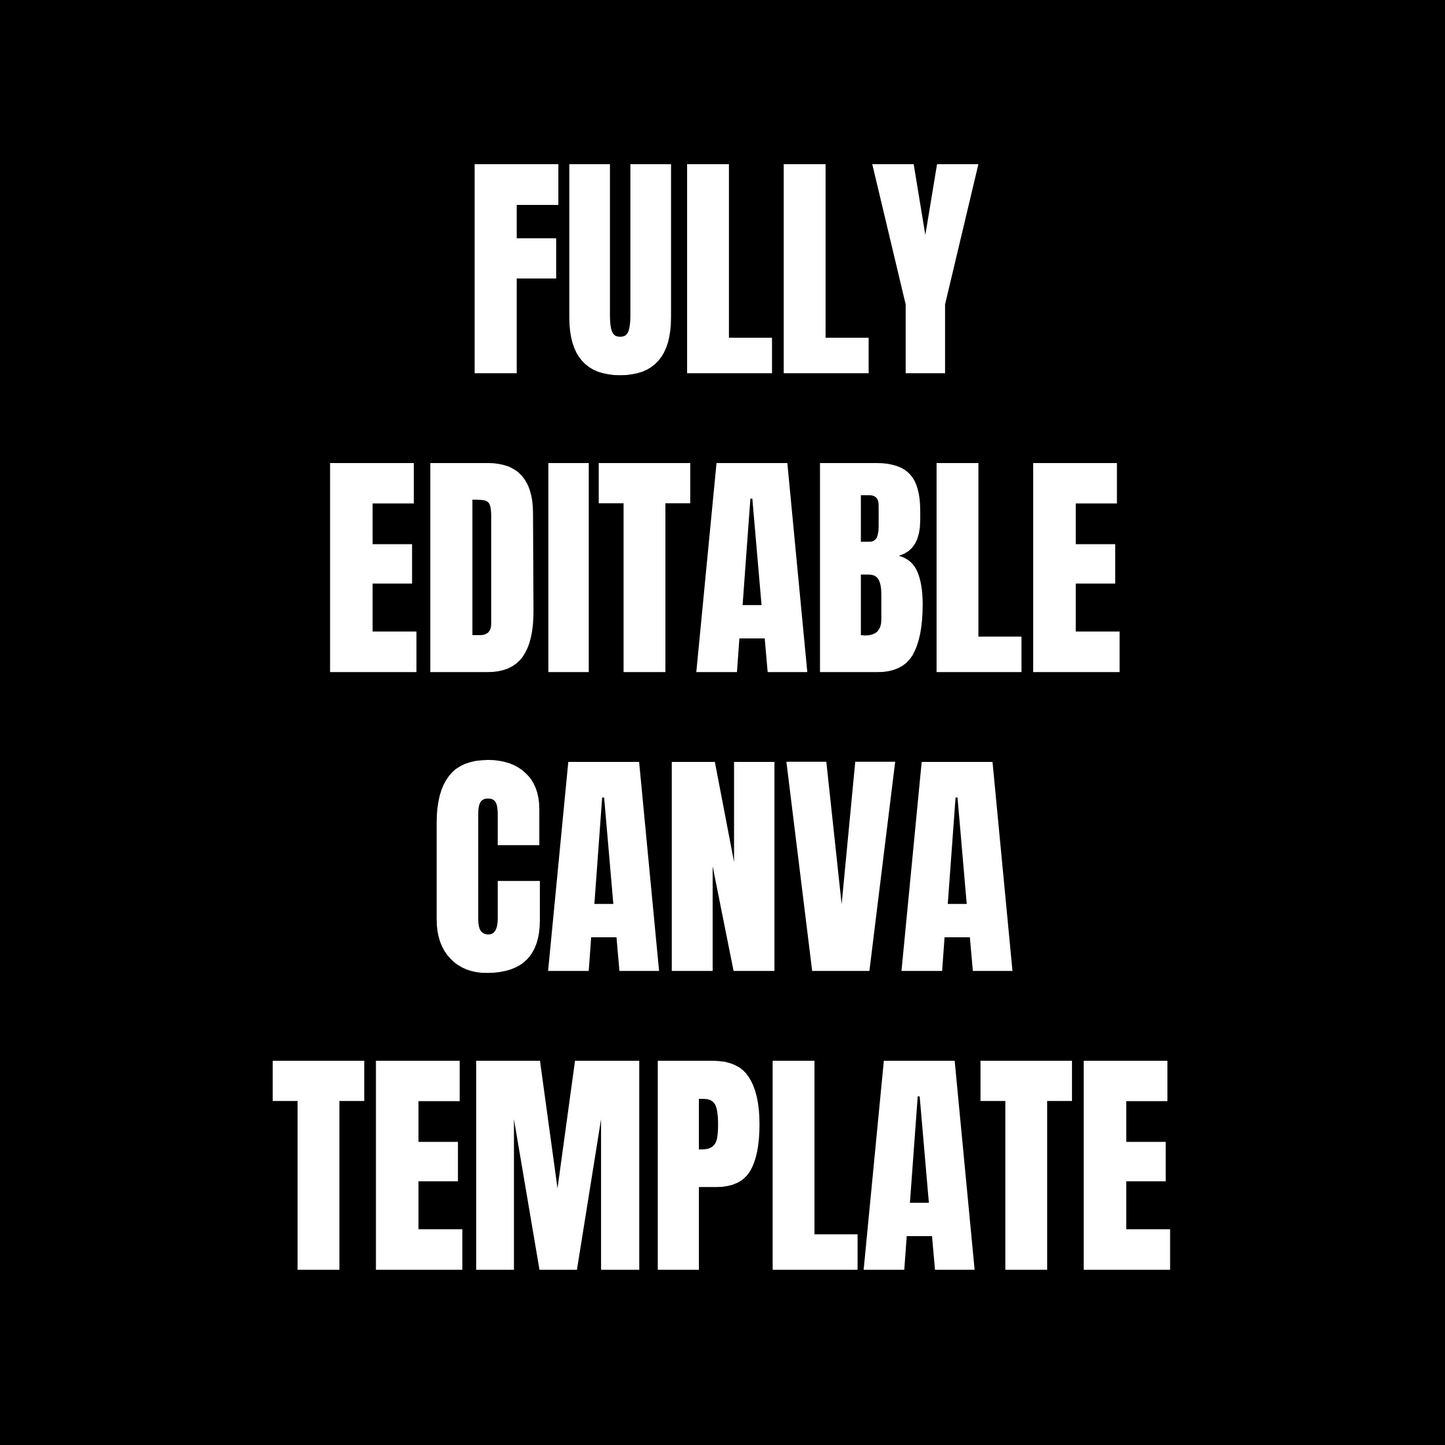 Beautifully Wrapped | Editable Journal PLR Kit with a Bonus Hyperlinked Planner | Fully Editable Canva Templates